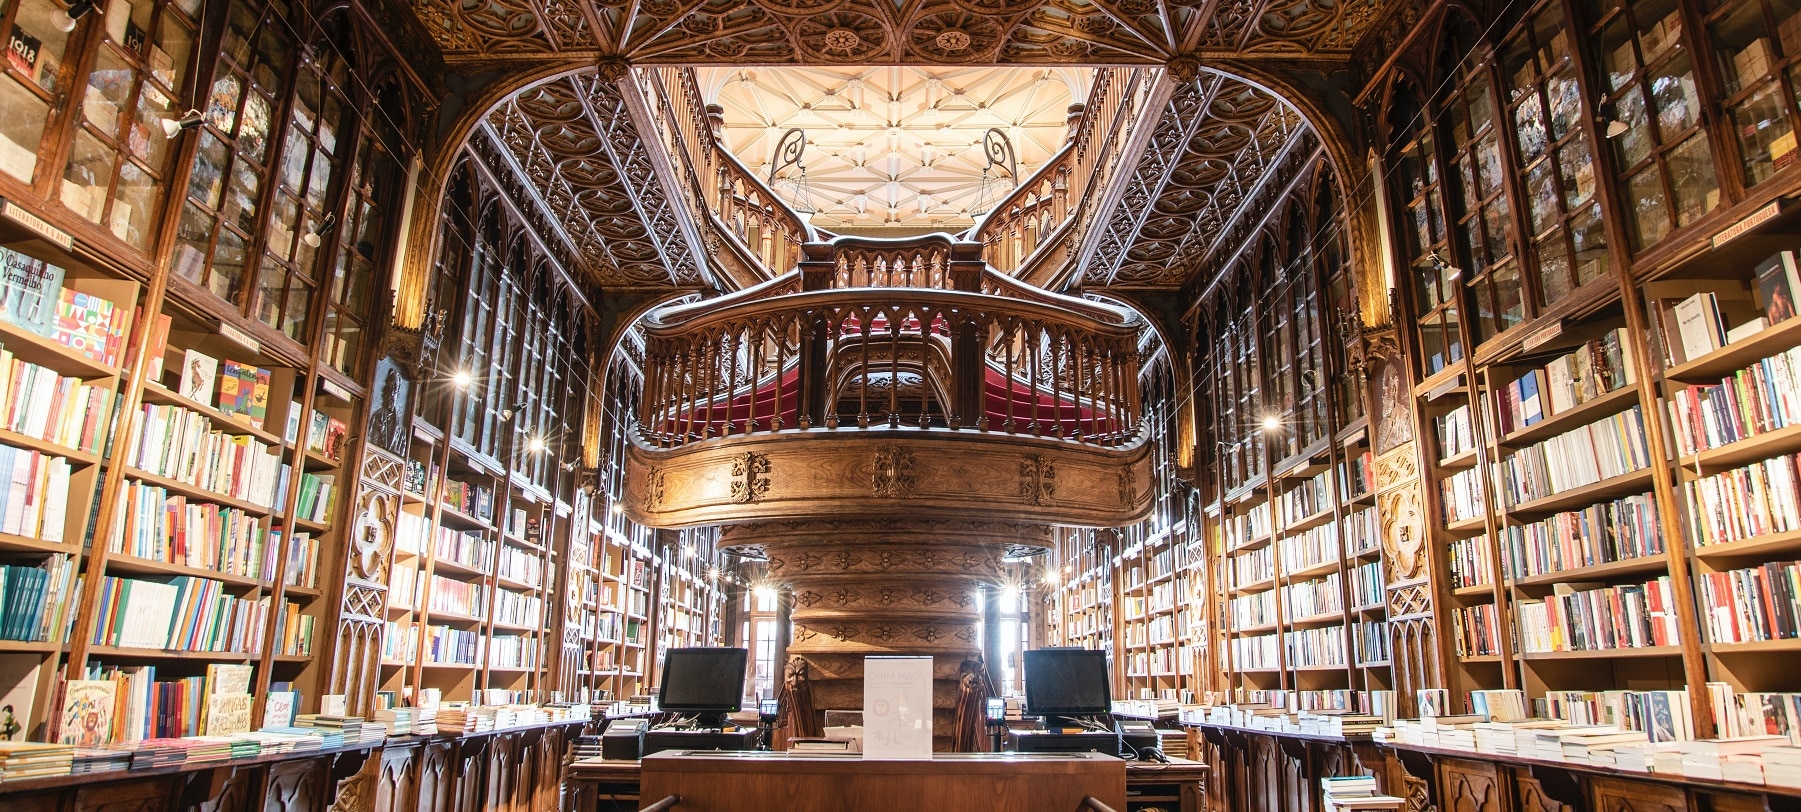 De statige, oude bibliotheek van Porto, Portugal